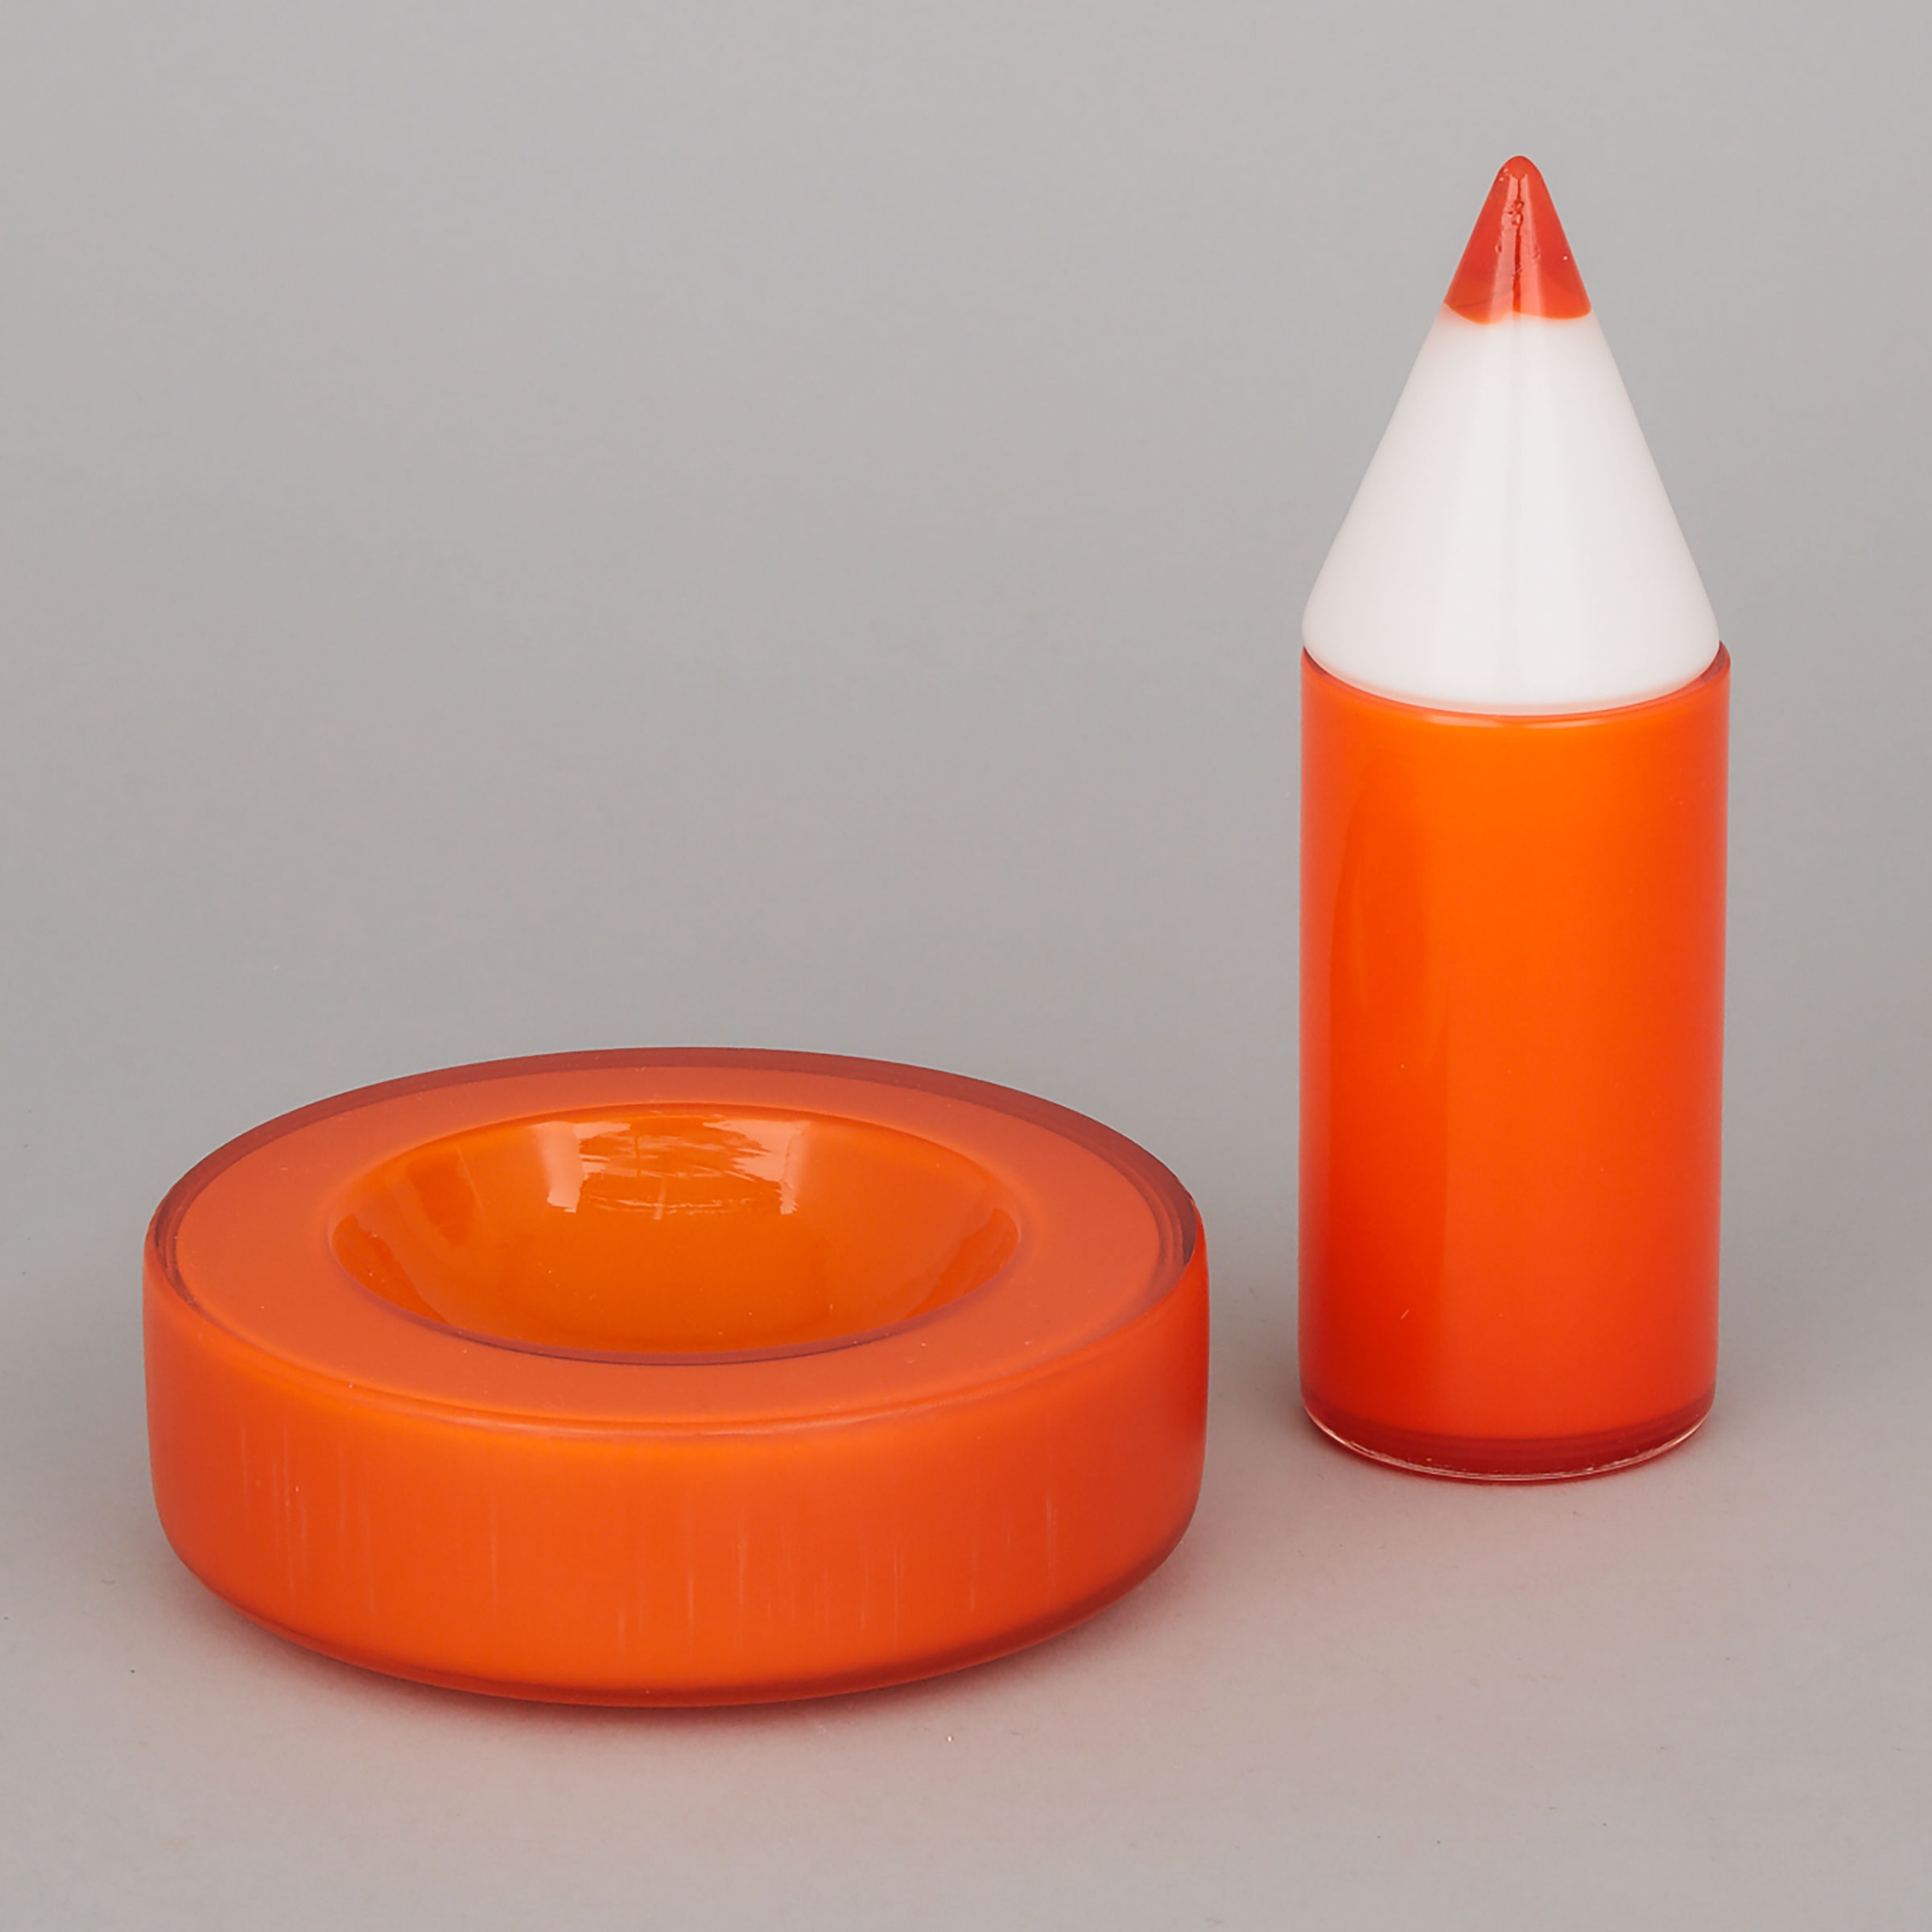 Murano Orange and White Cased Glass Bowl and Pencil Box, 20th century